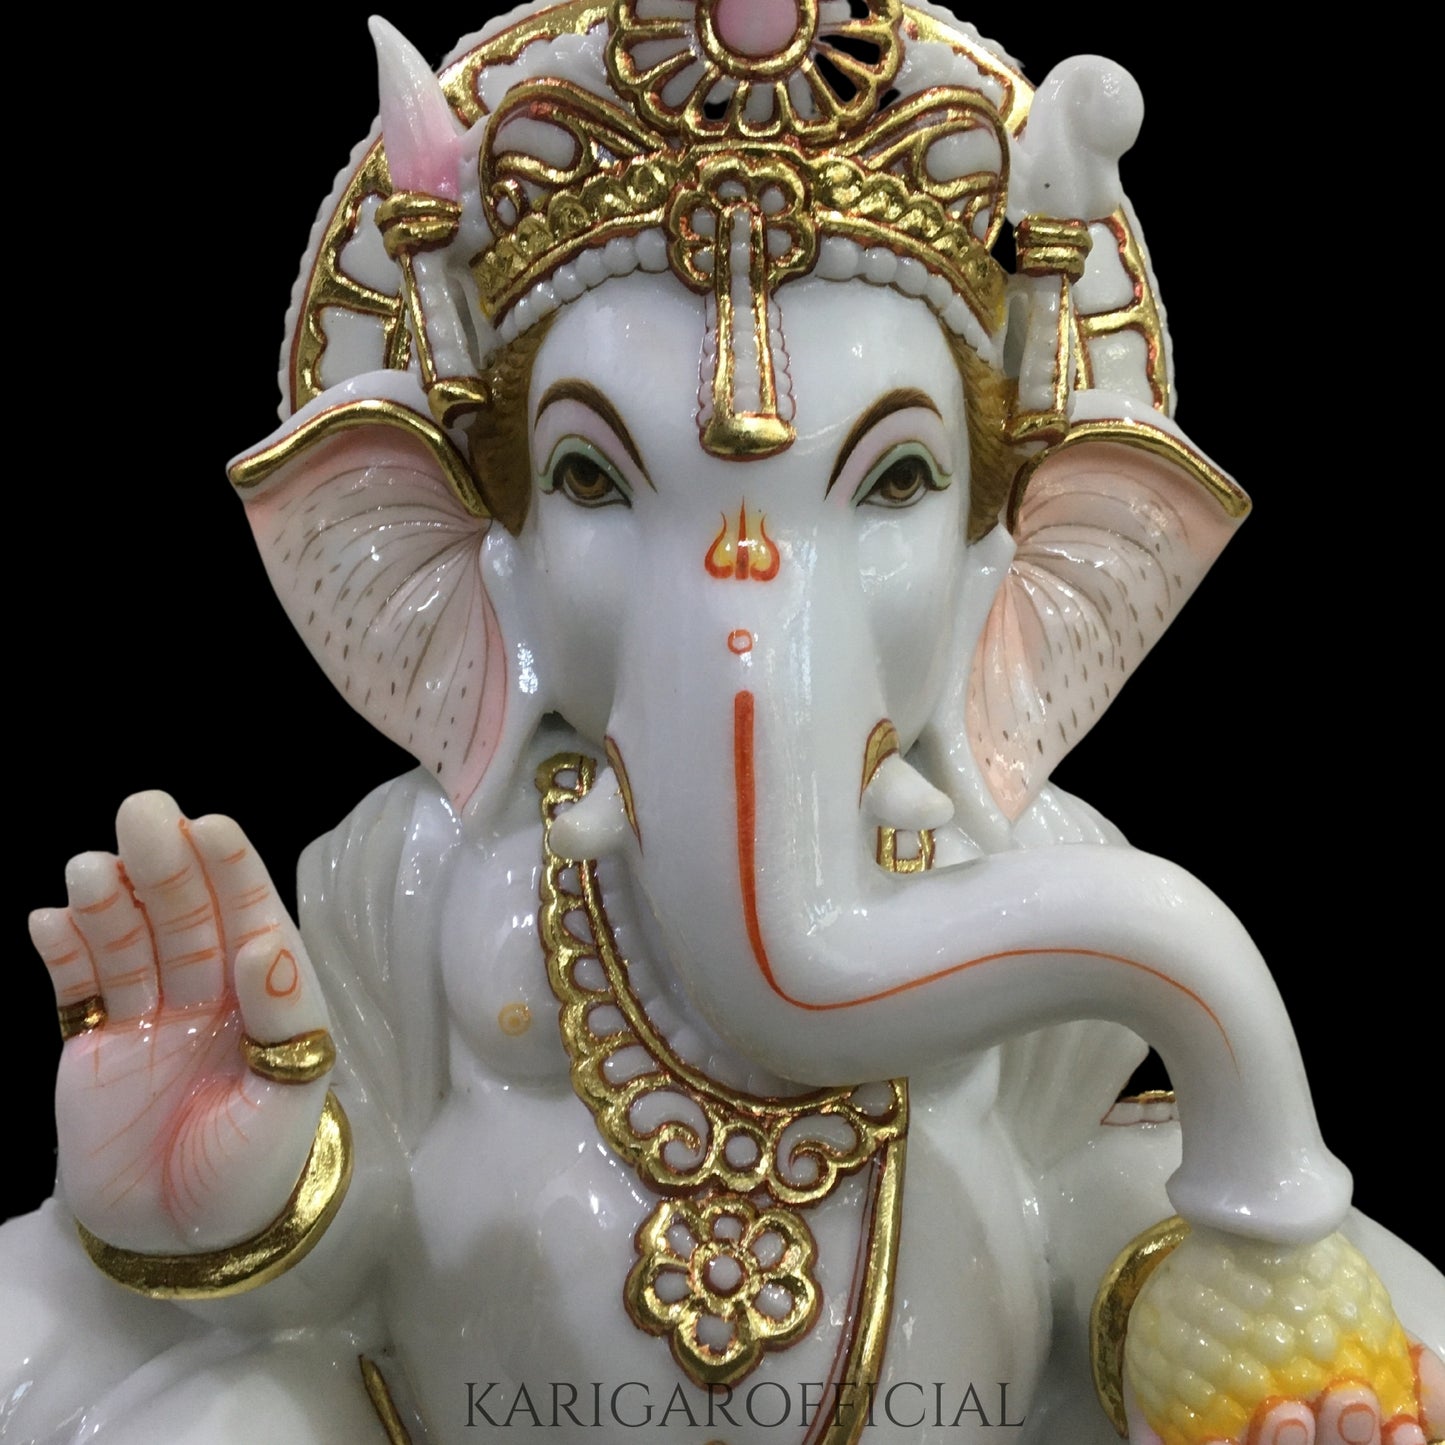 Ganesha Murti Statue 24 inches White Gold Marble Ganapati Idol Perfect Housewarming Gift Home First Ganesha